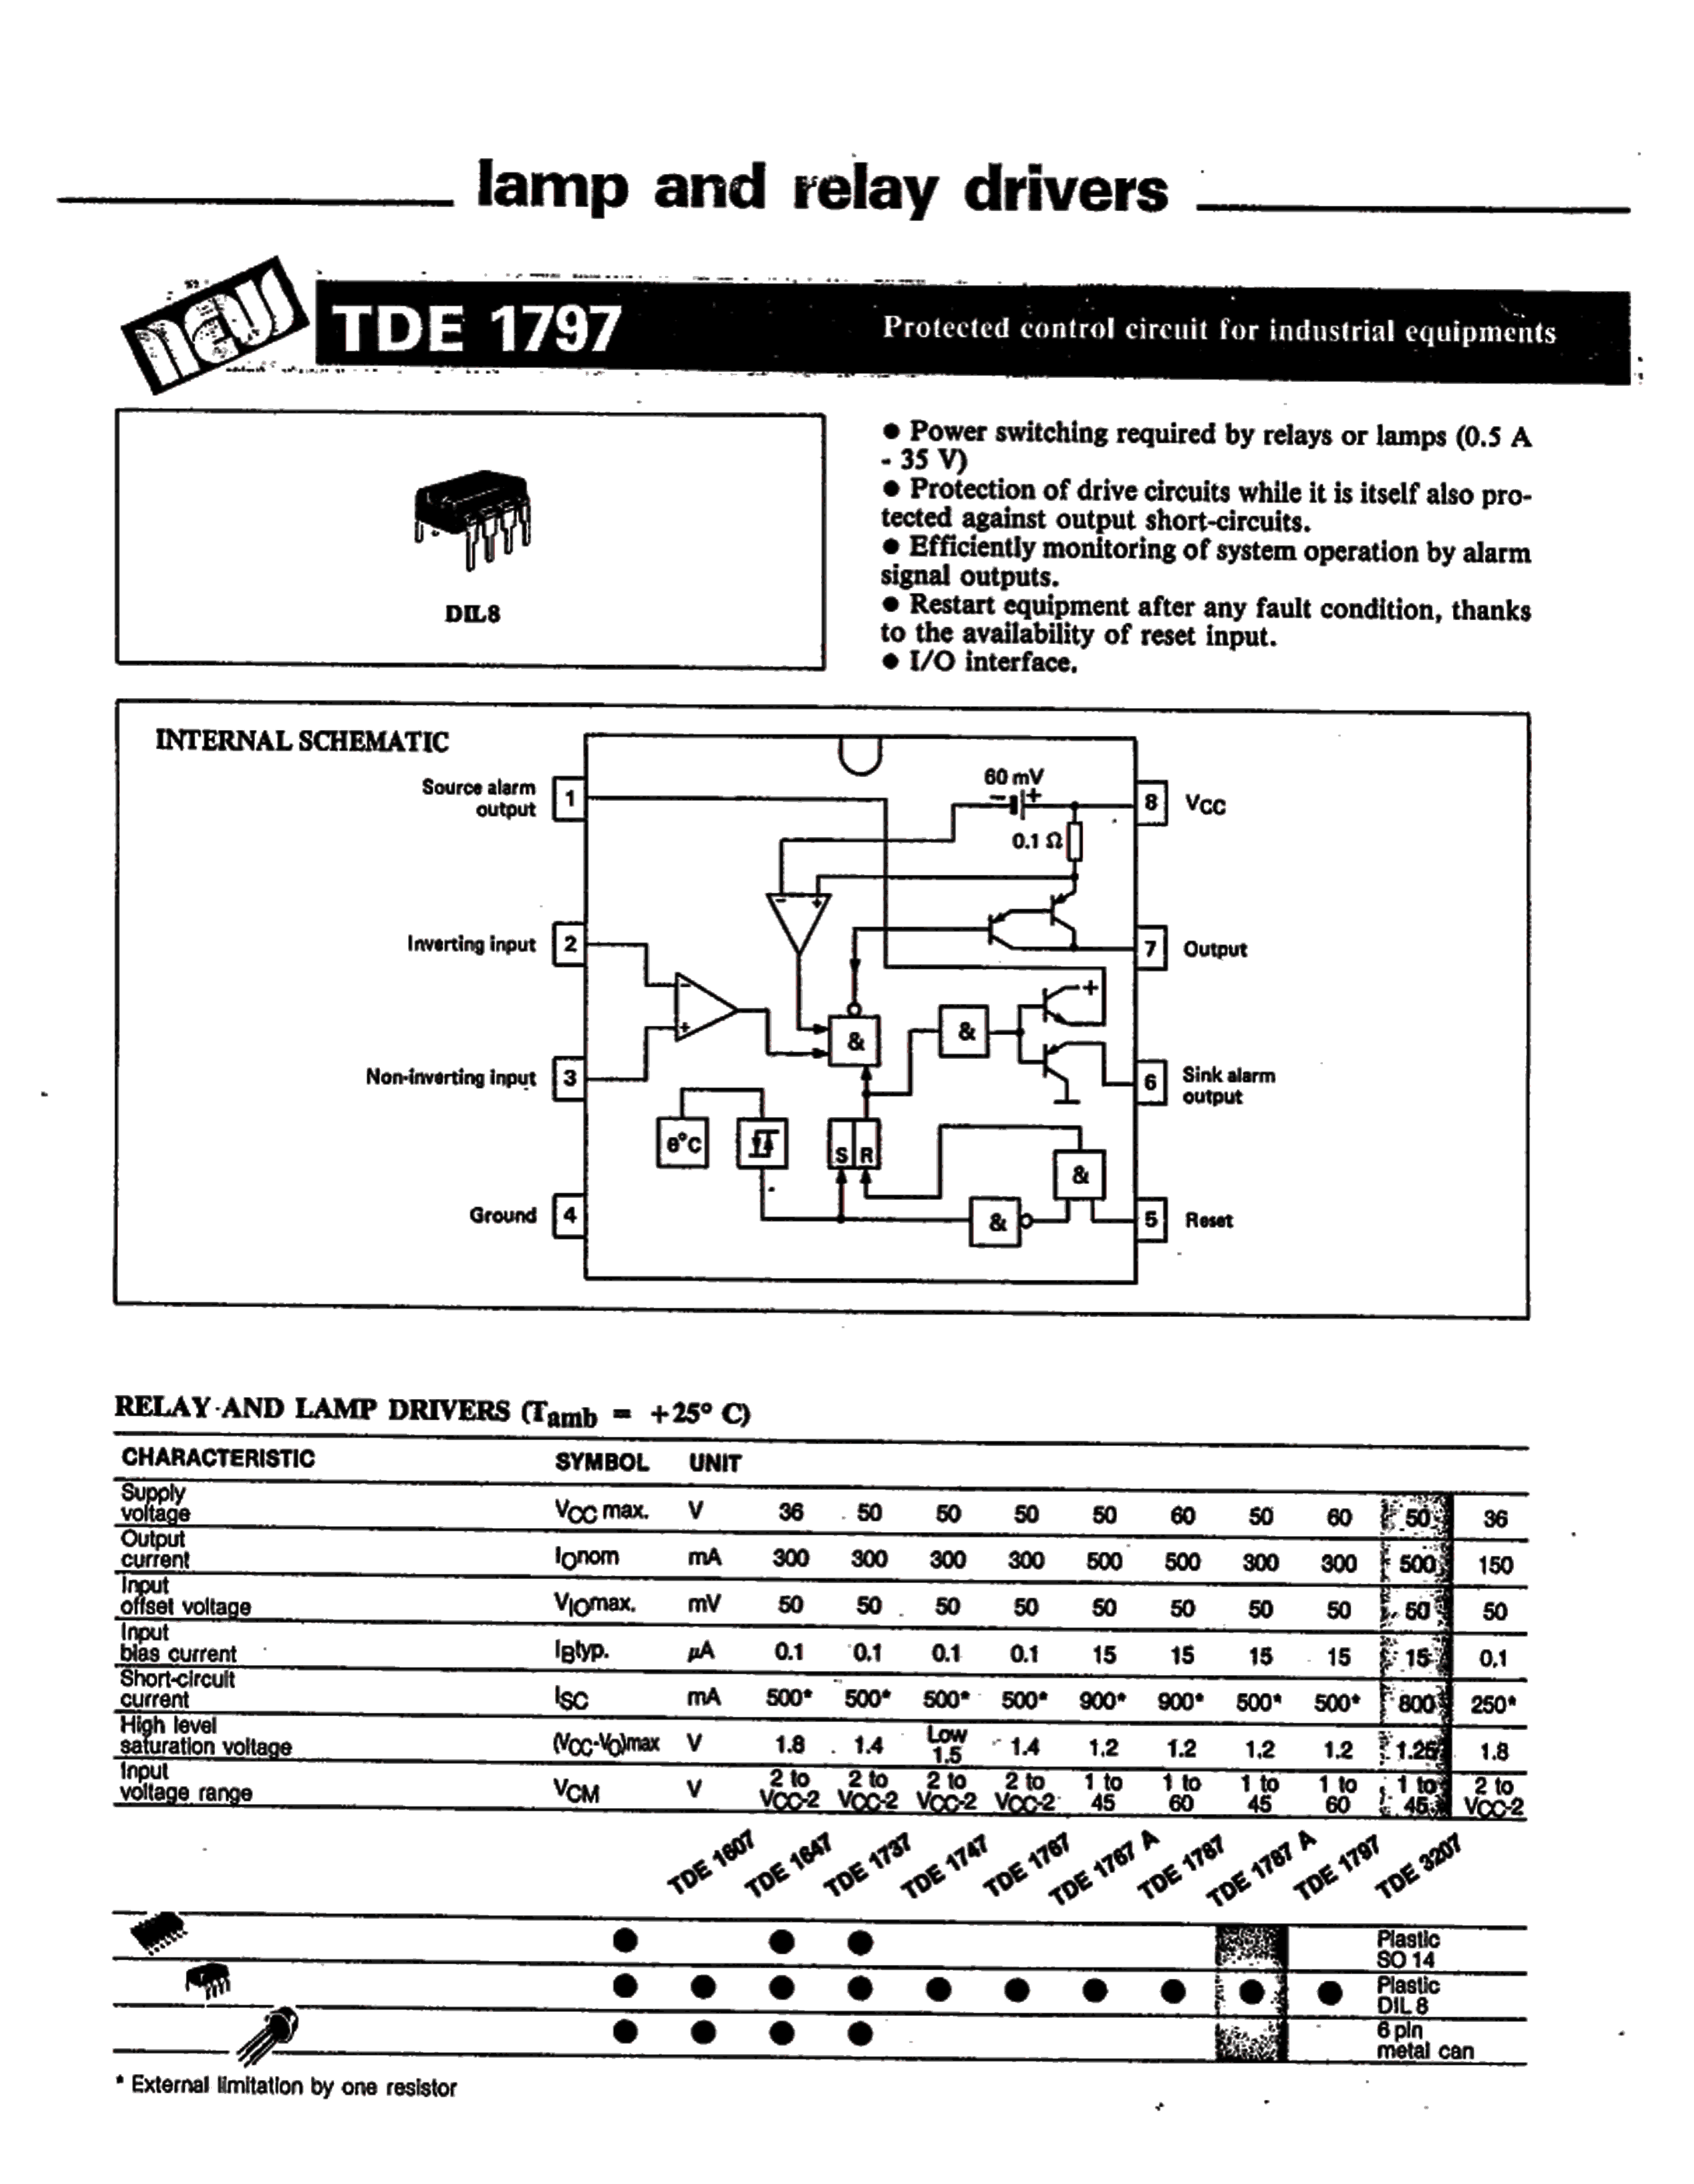 Datasheet TDE1737 - LAMP AND RELAY DRIVERS page 1